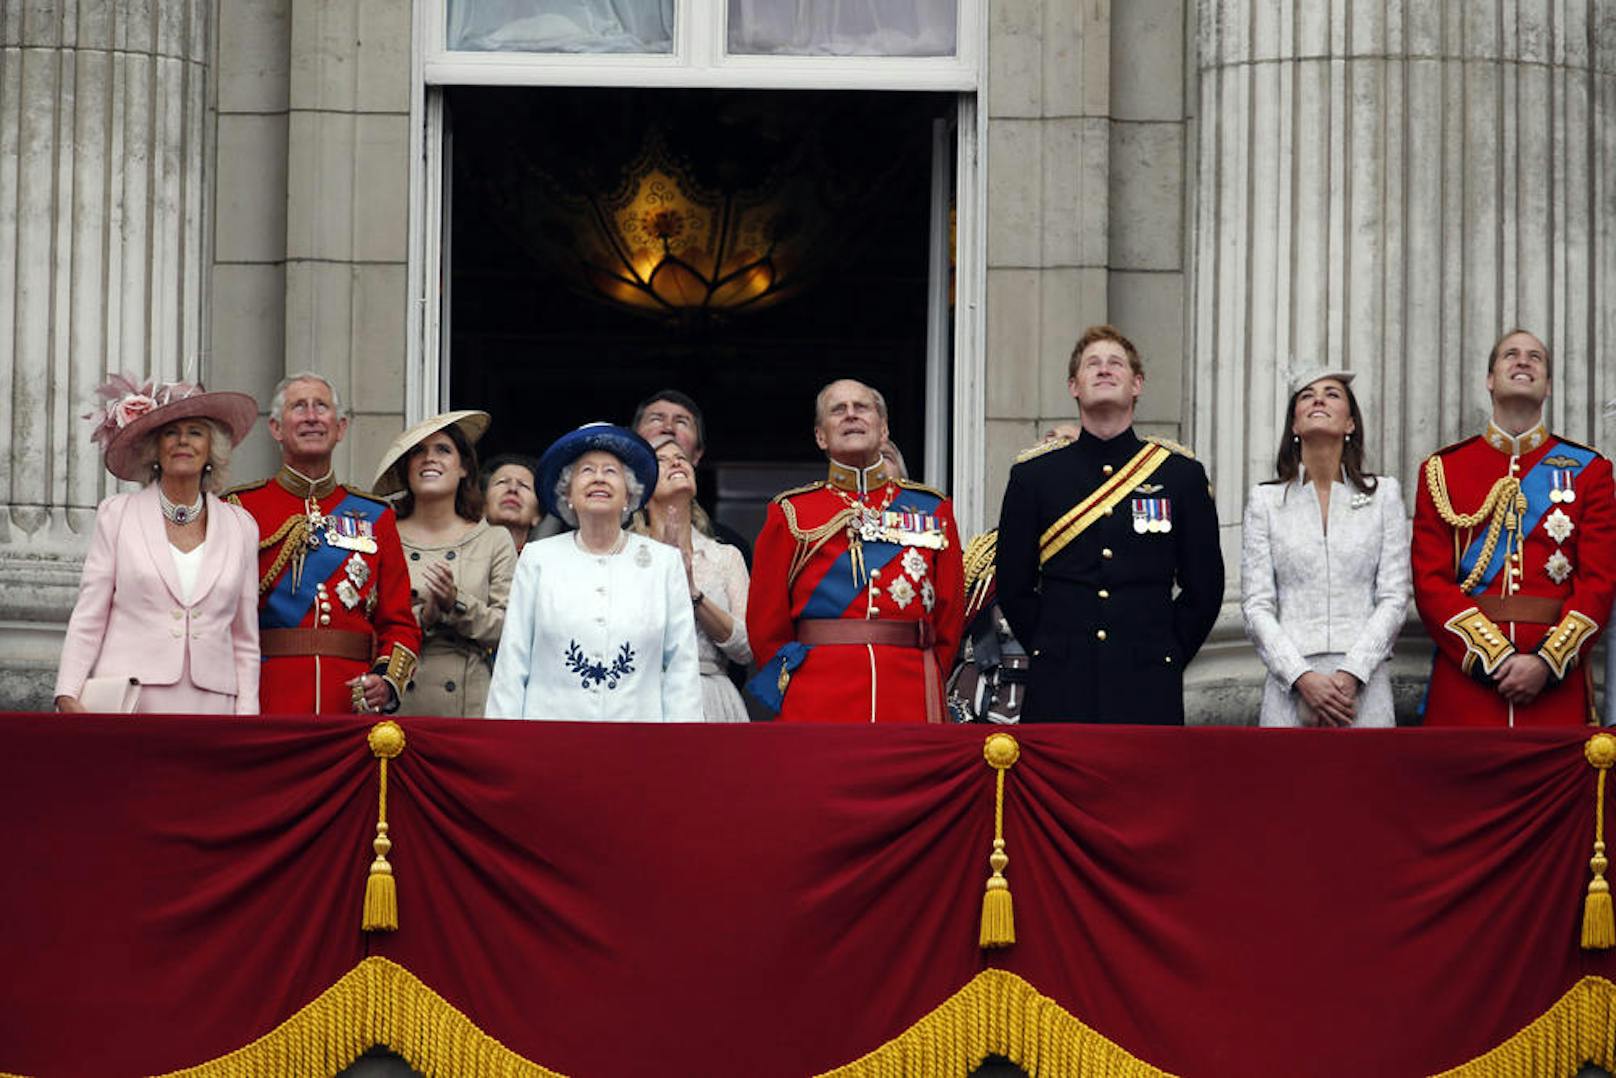 Blick nach oben: (v.l.n.r.) Camilla, die Duchess of Cornwall, Prince Charles, Princess Eugenie, Princess Anne, Sophie, die Countess of Wessex, Tim Lawrence, Prince Philip, Prince Harry, Kate, die Duchess of Cambridge und Prince William